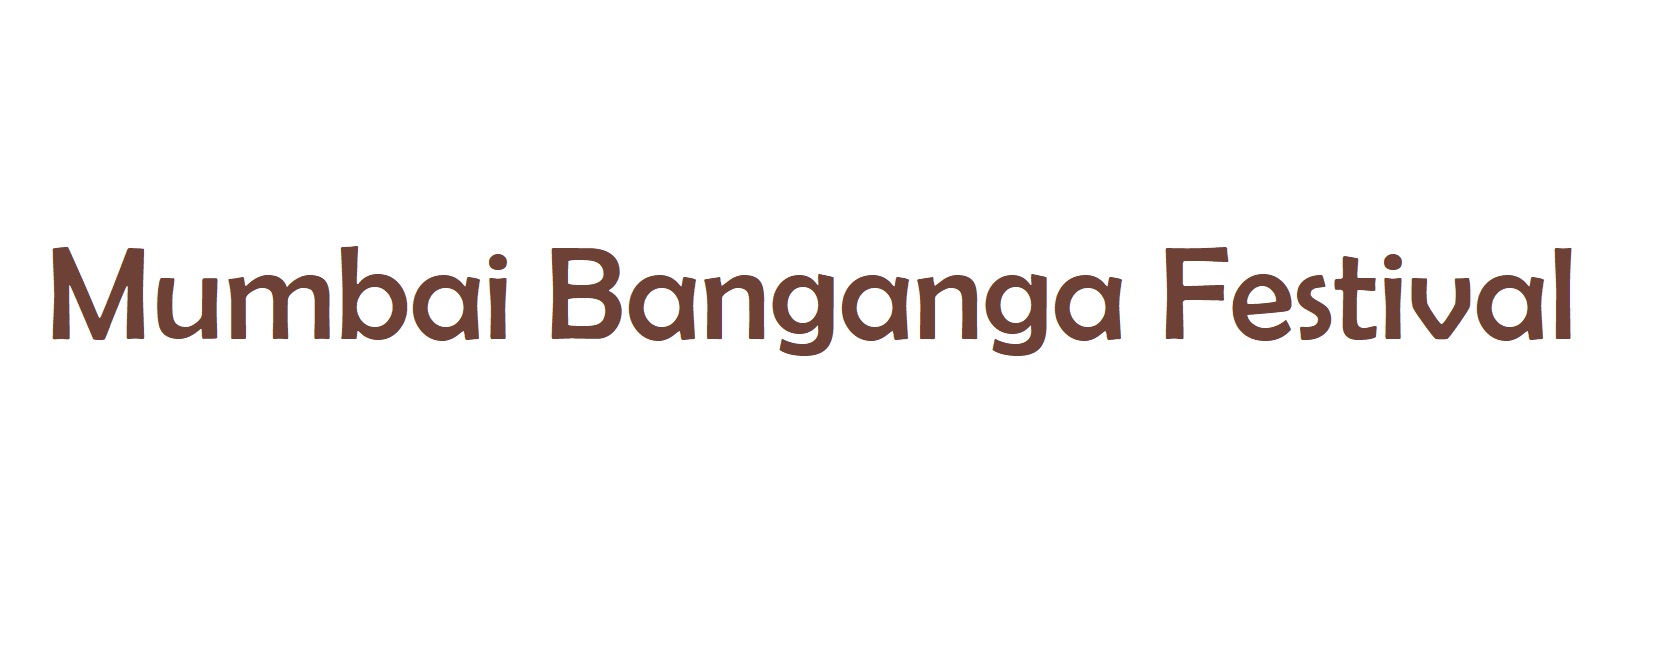 Banganga Festival Tour